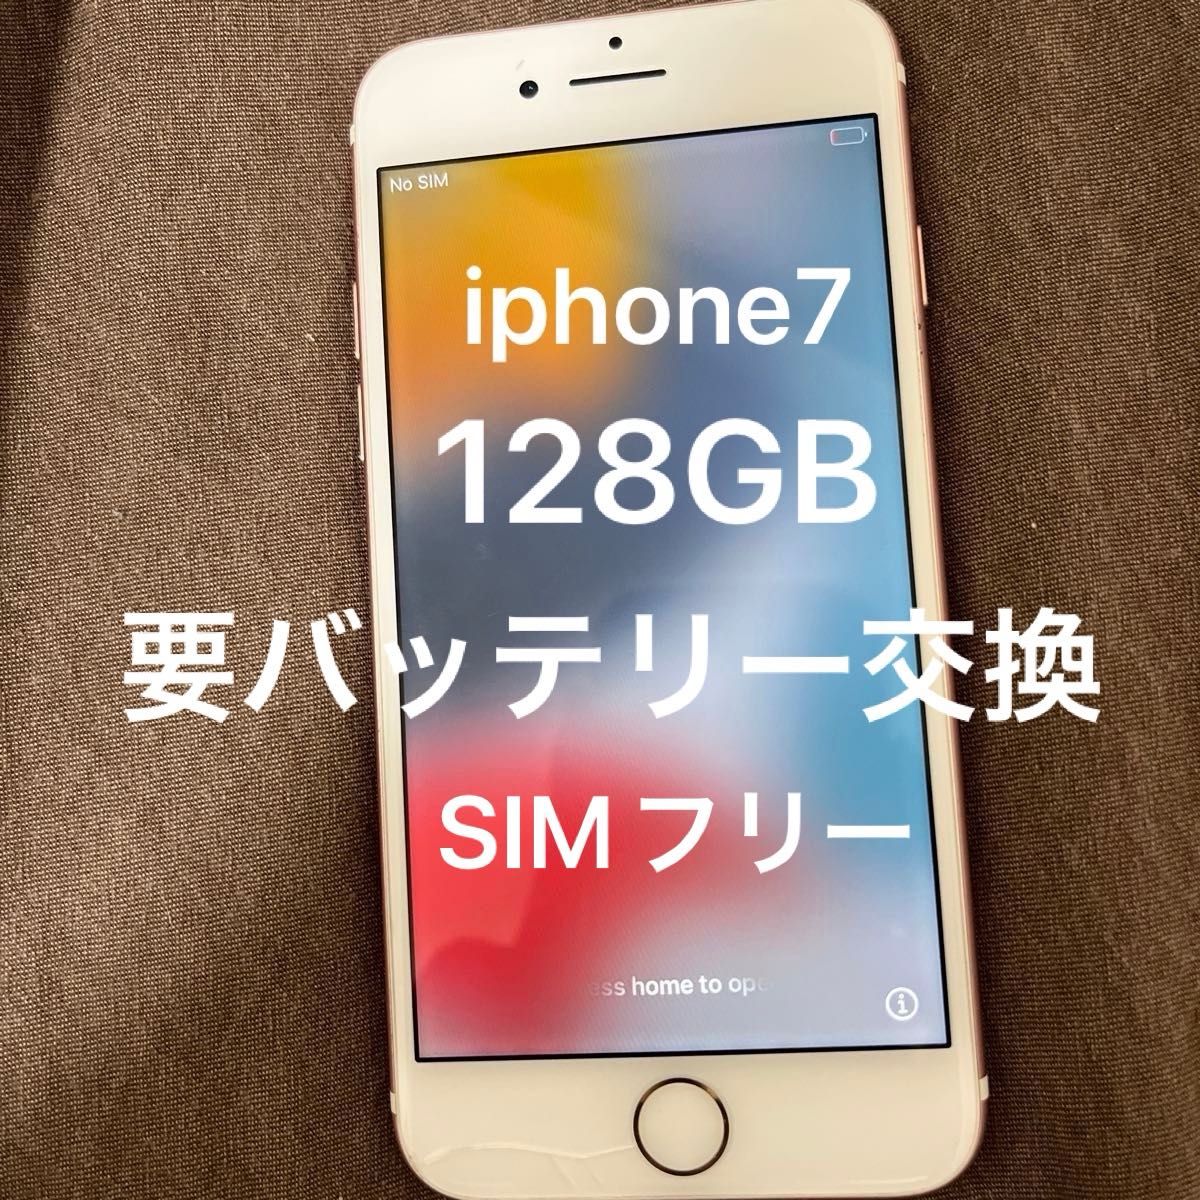 iphone7 128GB ローズゴールド simフリー SIMフリー シムフリー